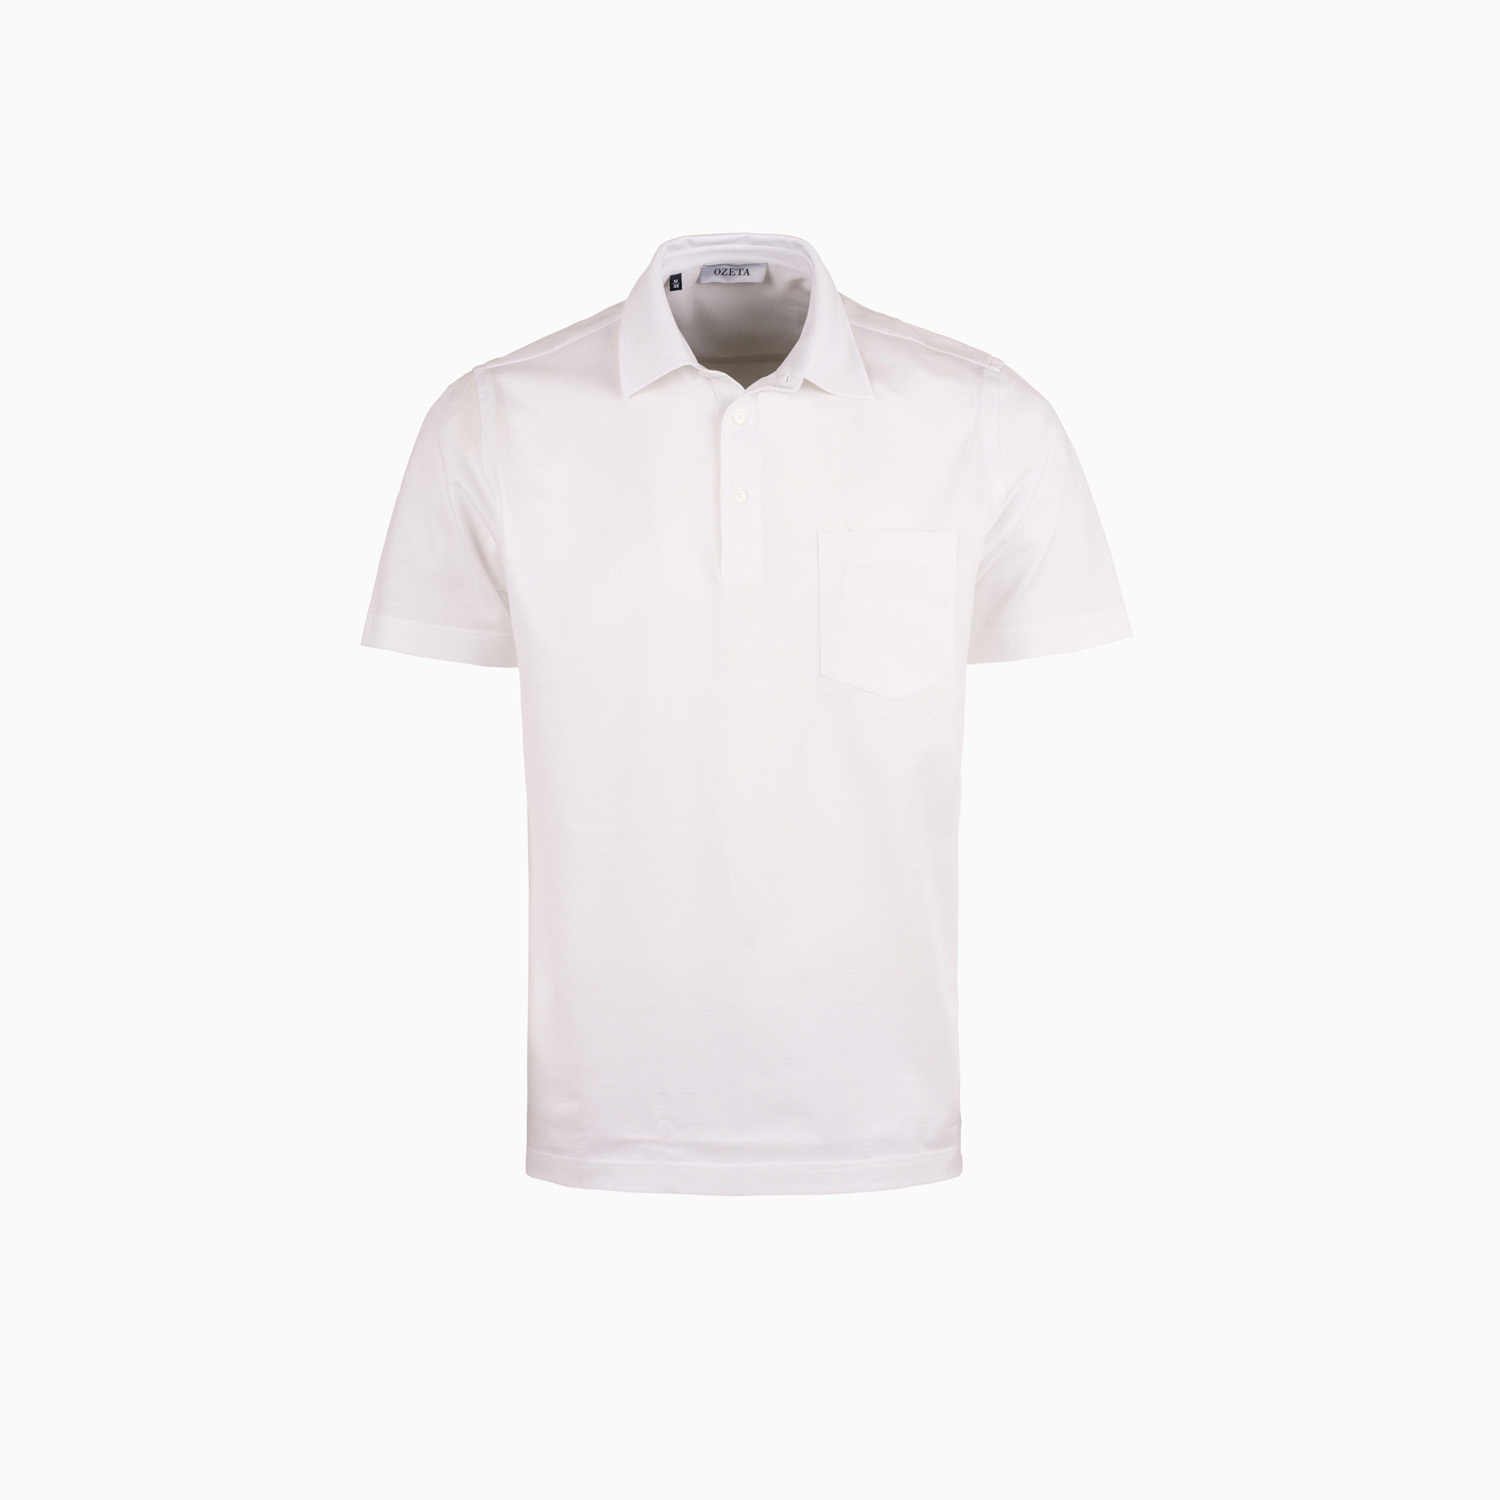 Poloshirt Weiß – Baumwoll-Piqué